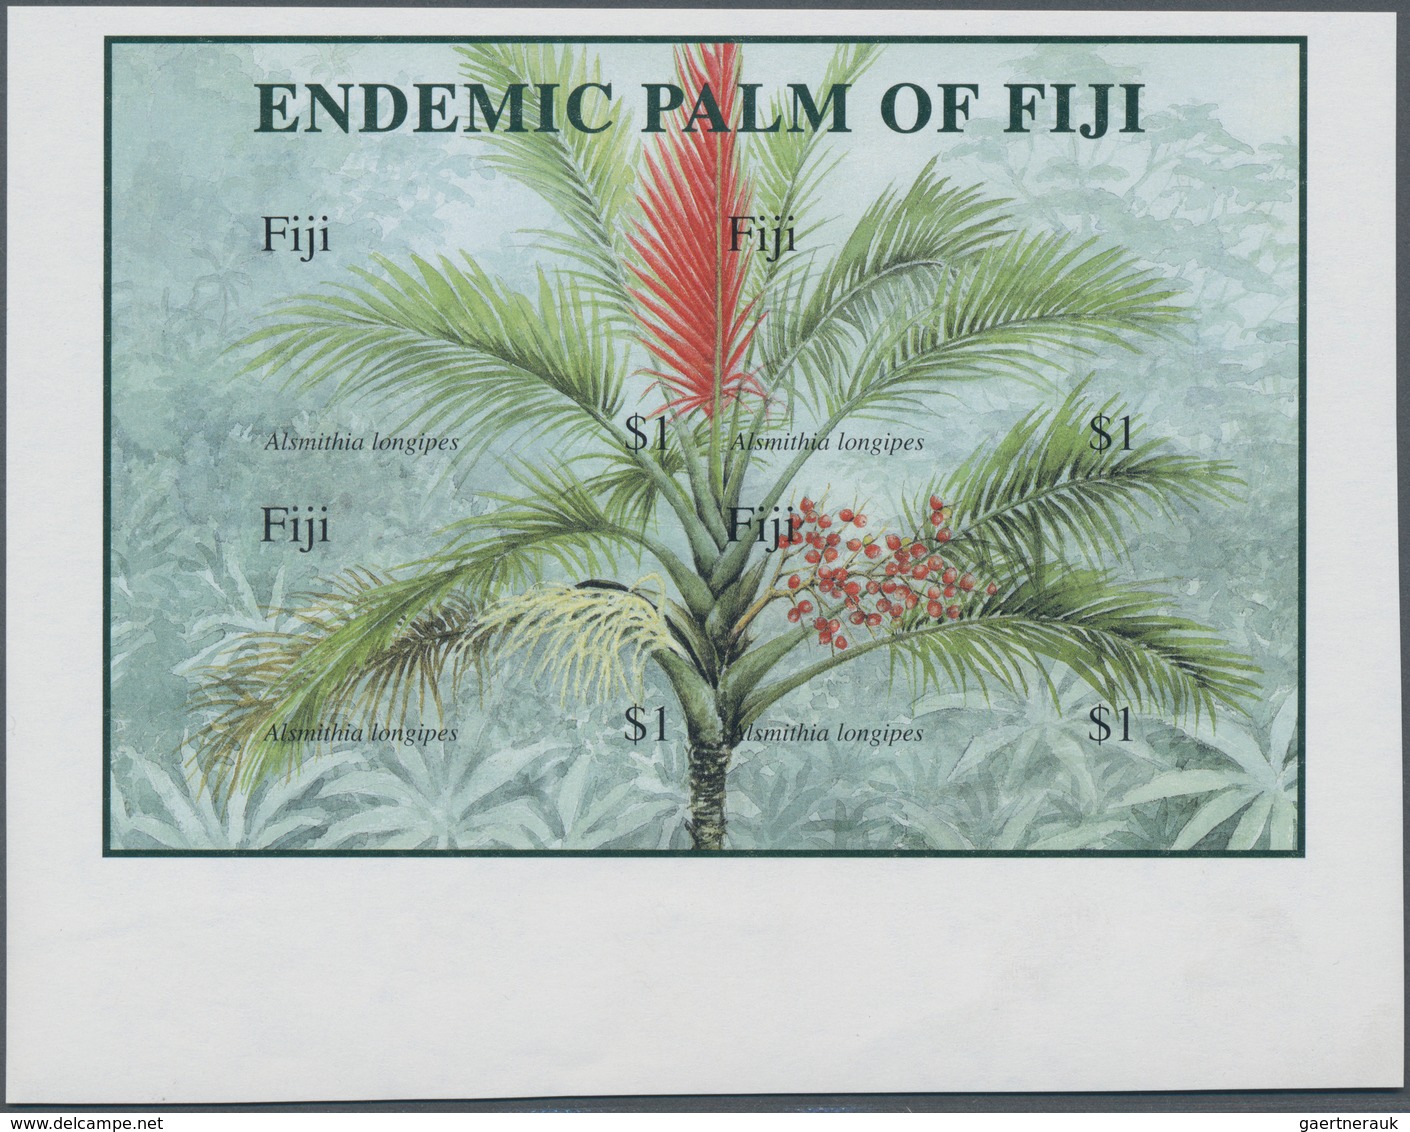 Fiji-Inseln: 2000, Endemic Palm Of Fiji IMPERFORATE Miniature Sheet With Wide Margins, Mint Never Hi - Fidschi-Inseln (...-1970)